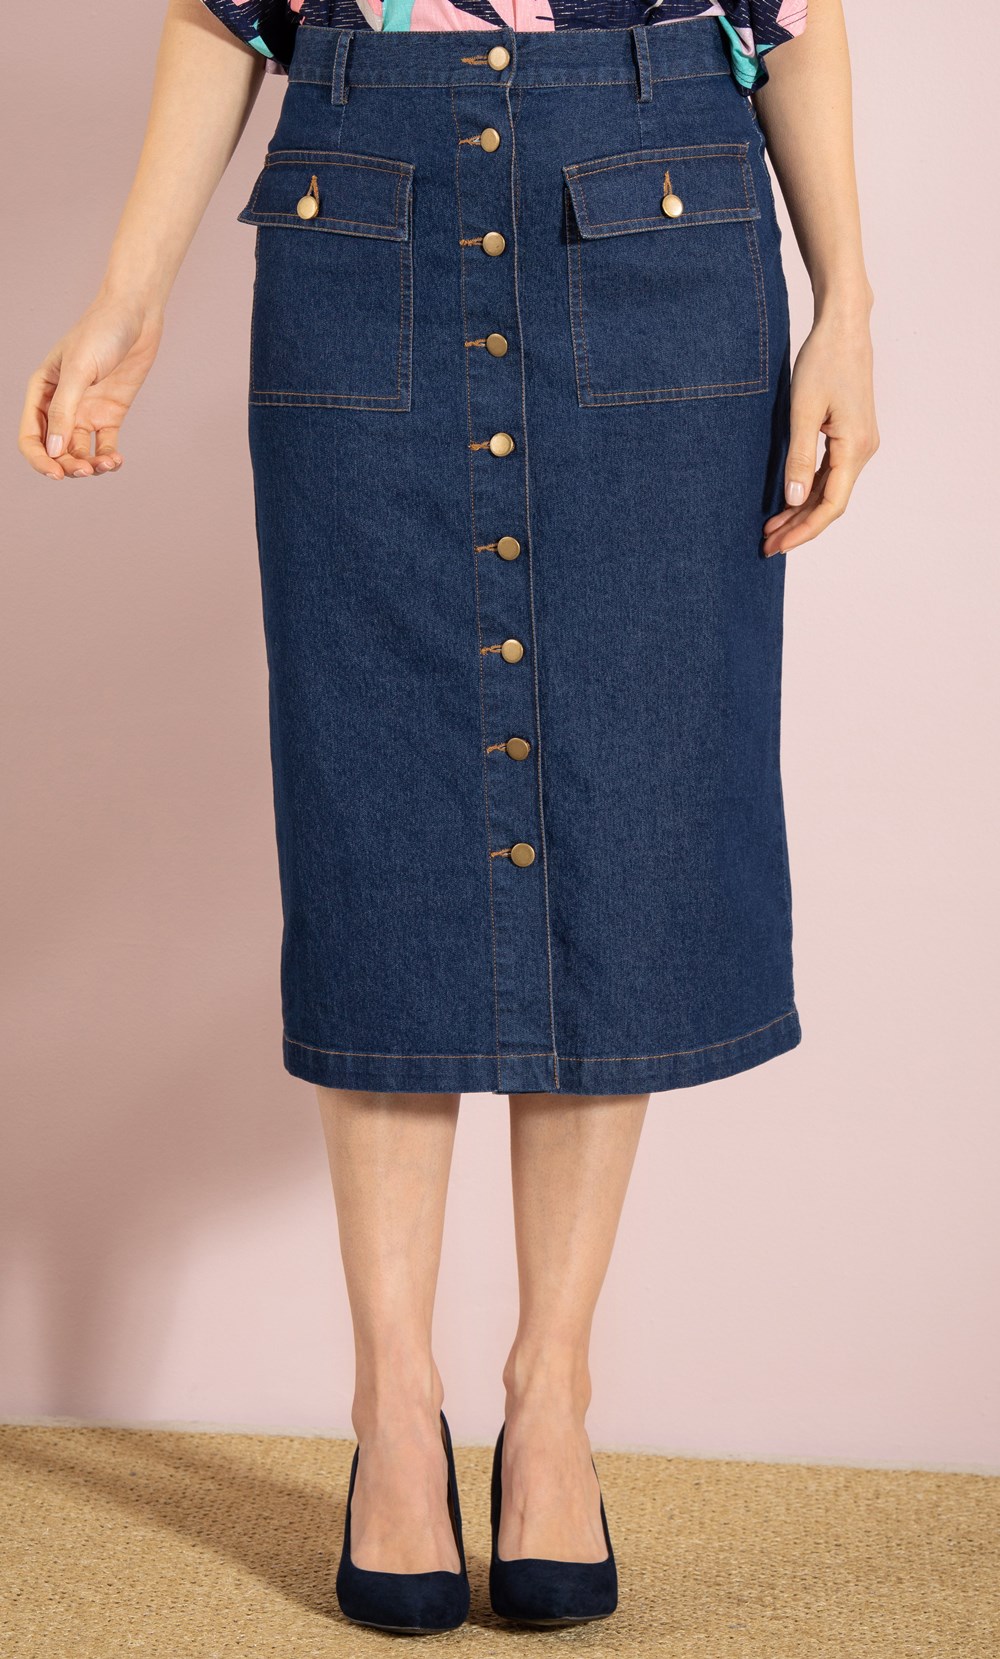 The Midi-Skirt Is Kendall Jenner's Secret Wardrobe Weapon | British Vogue